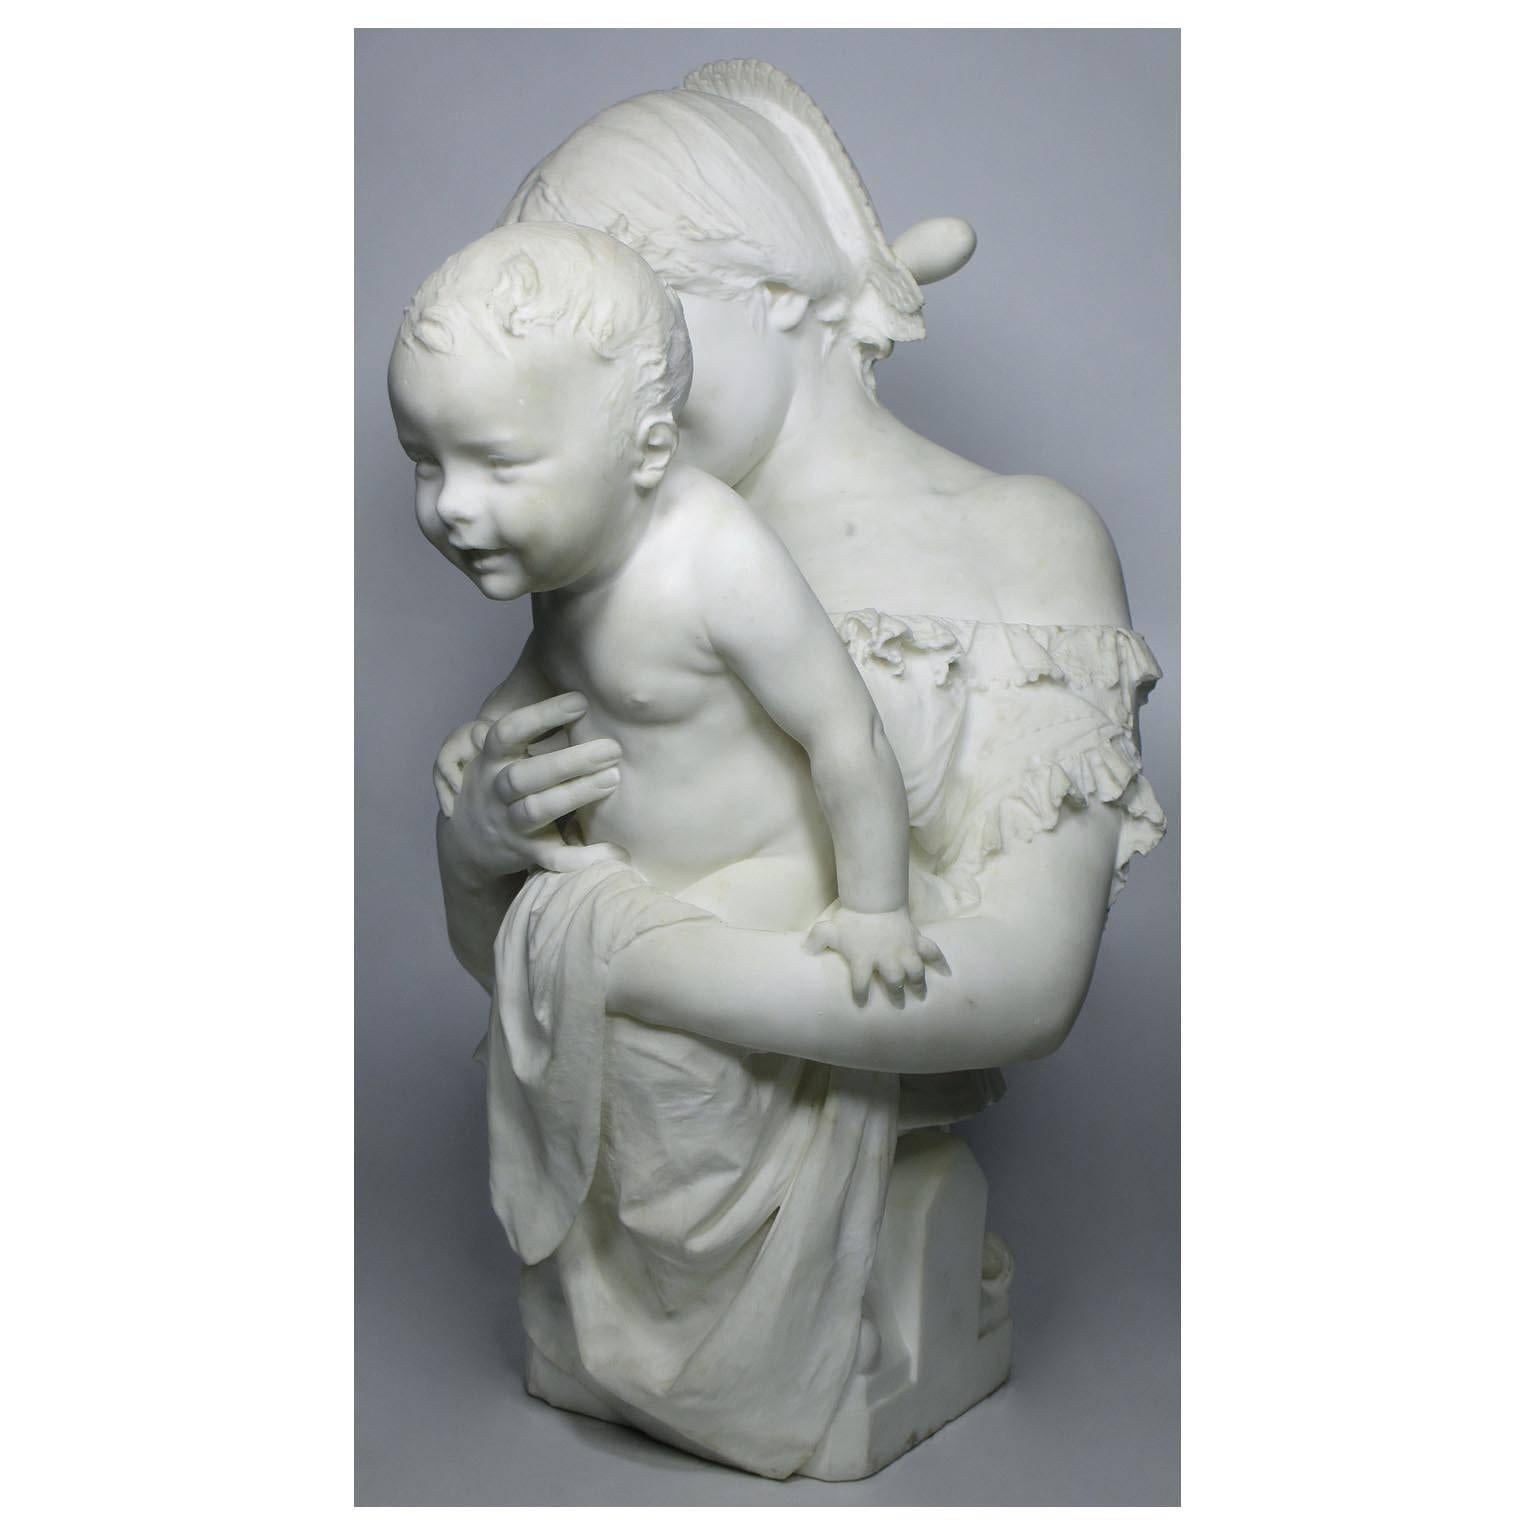 19th century marble sculpture